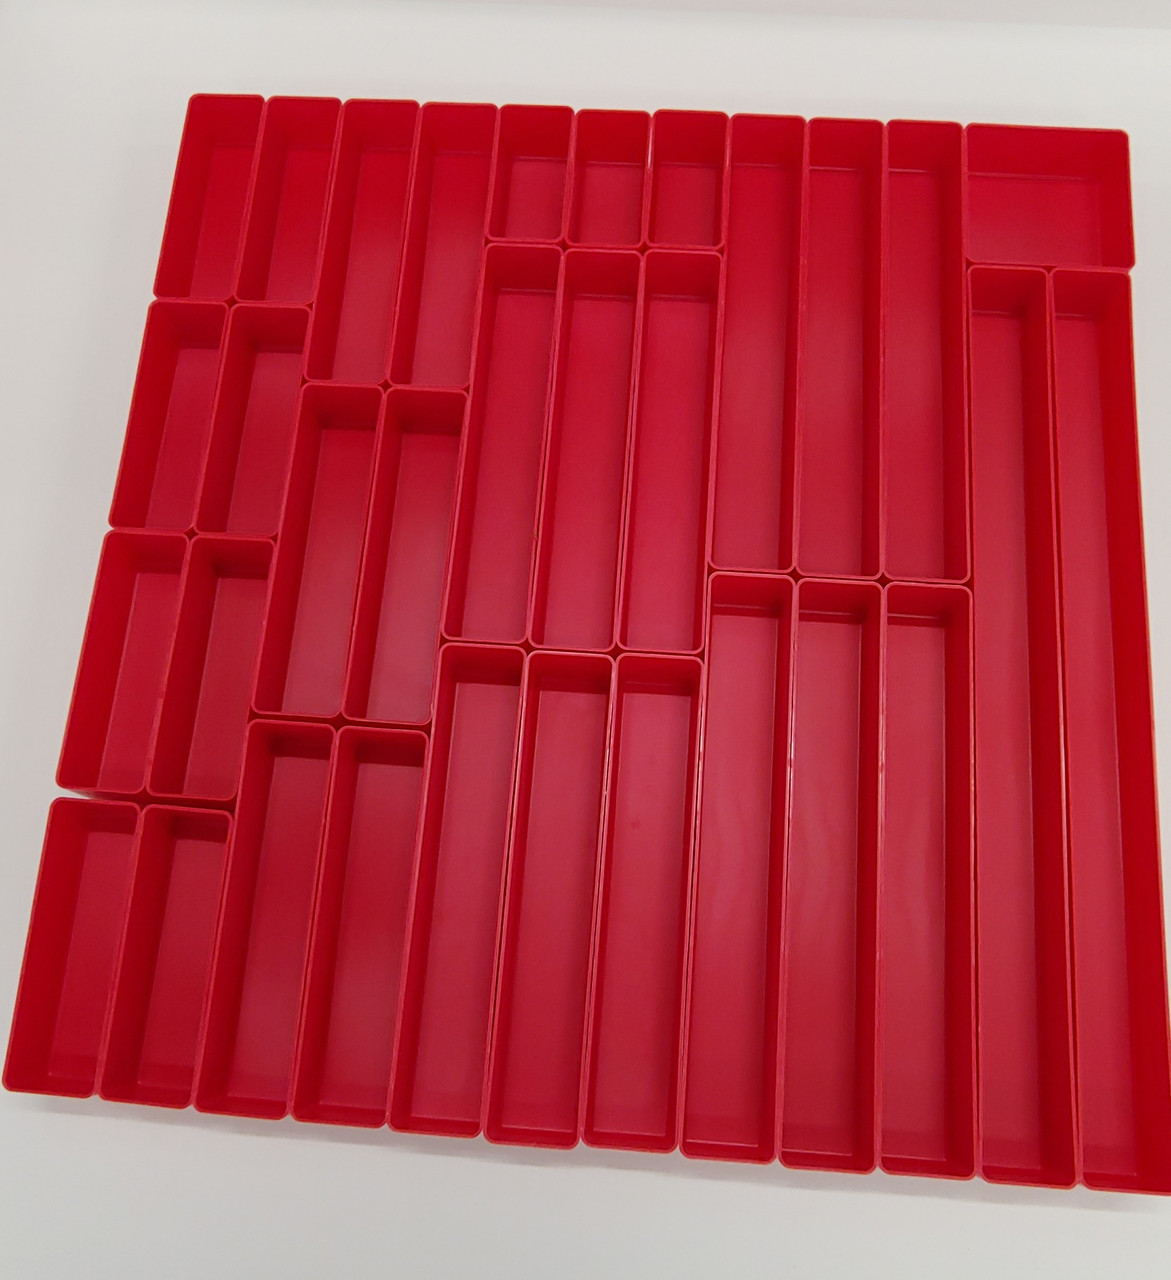 32 piece Red Plastic Box Assortment - 7 sizes - 2 deep